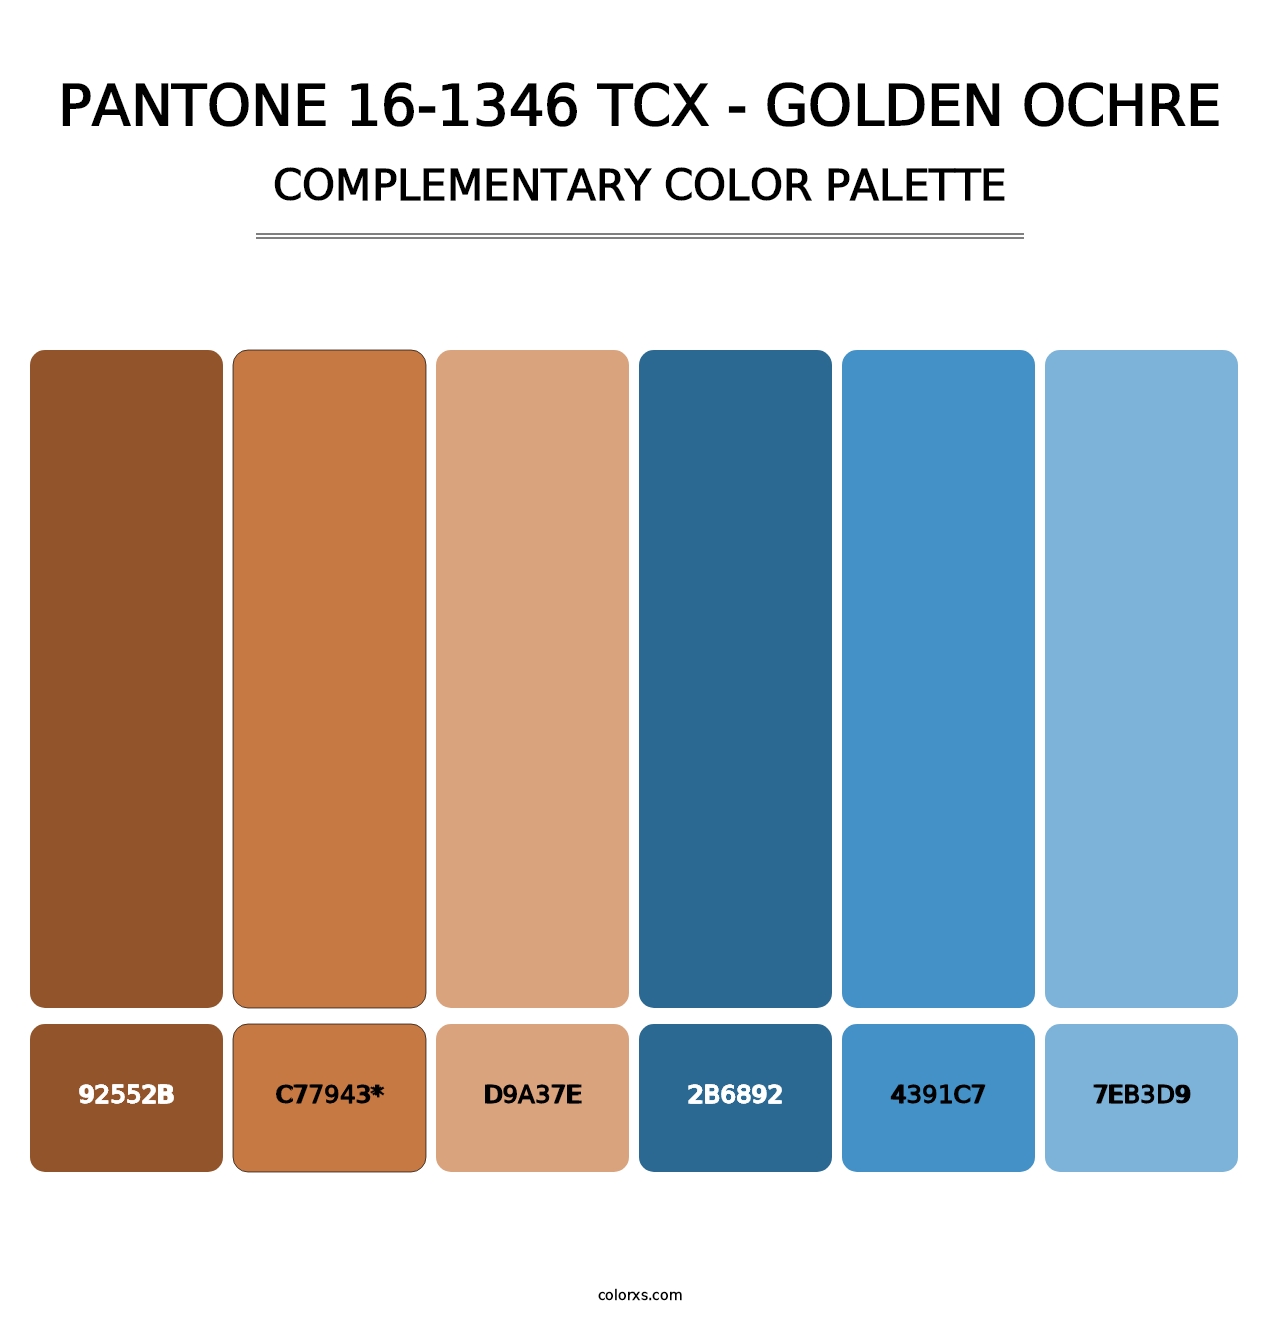 PANTONE 16-1346 TCX - Golden Ochre - Complementary Color Palette